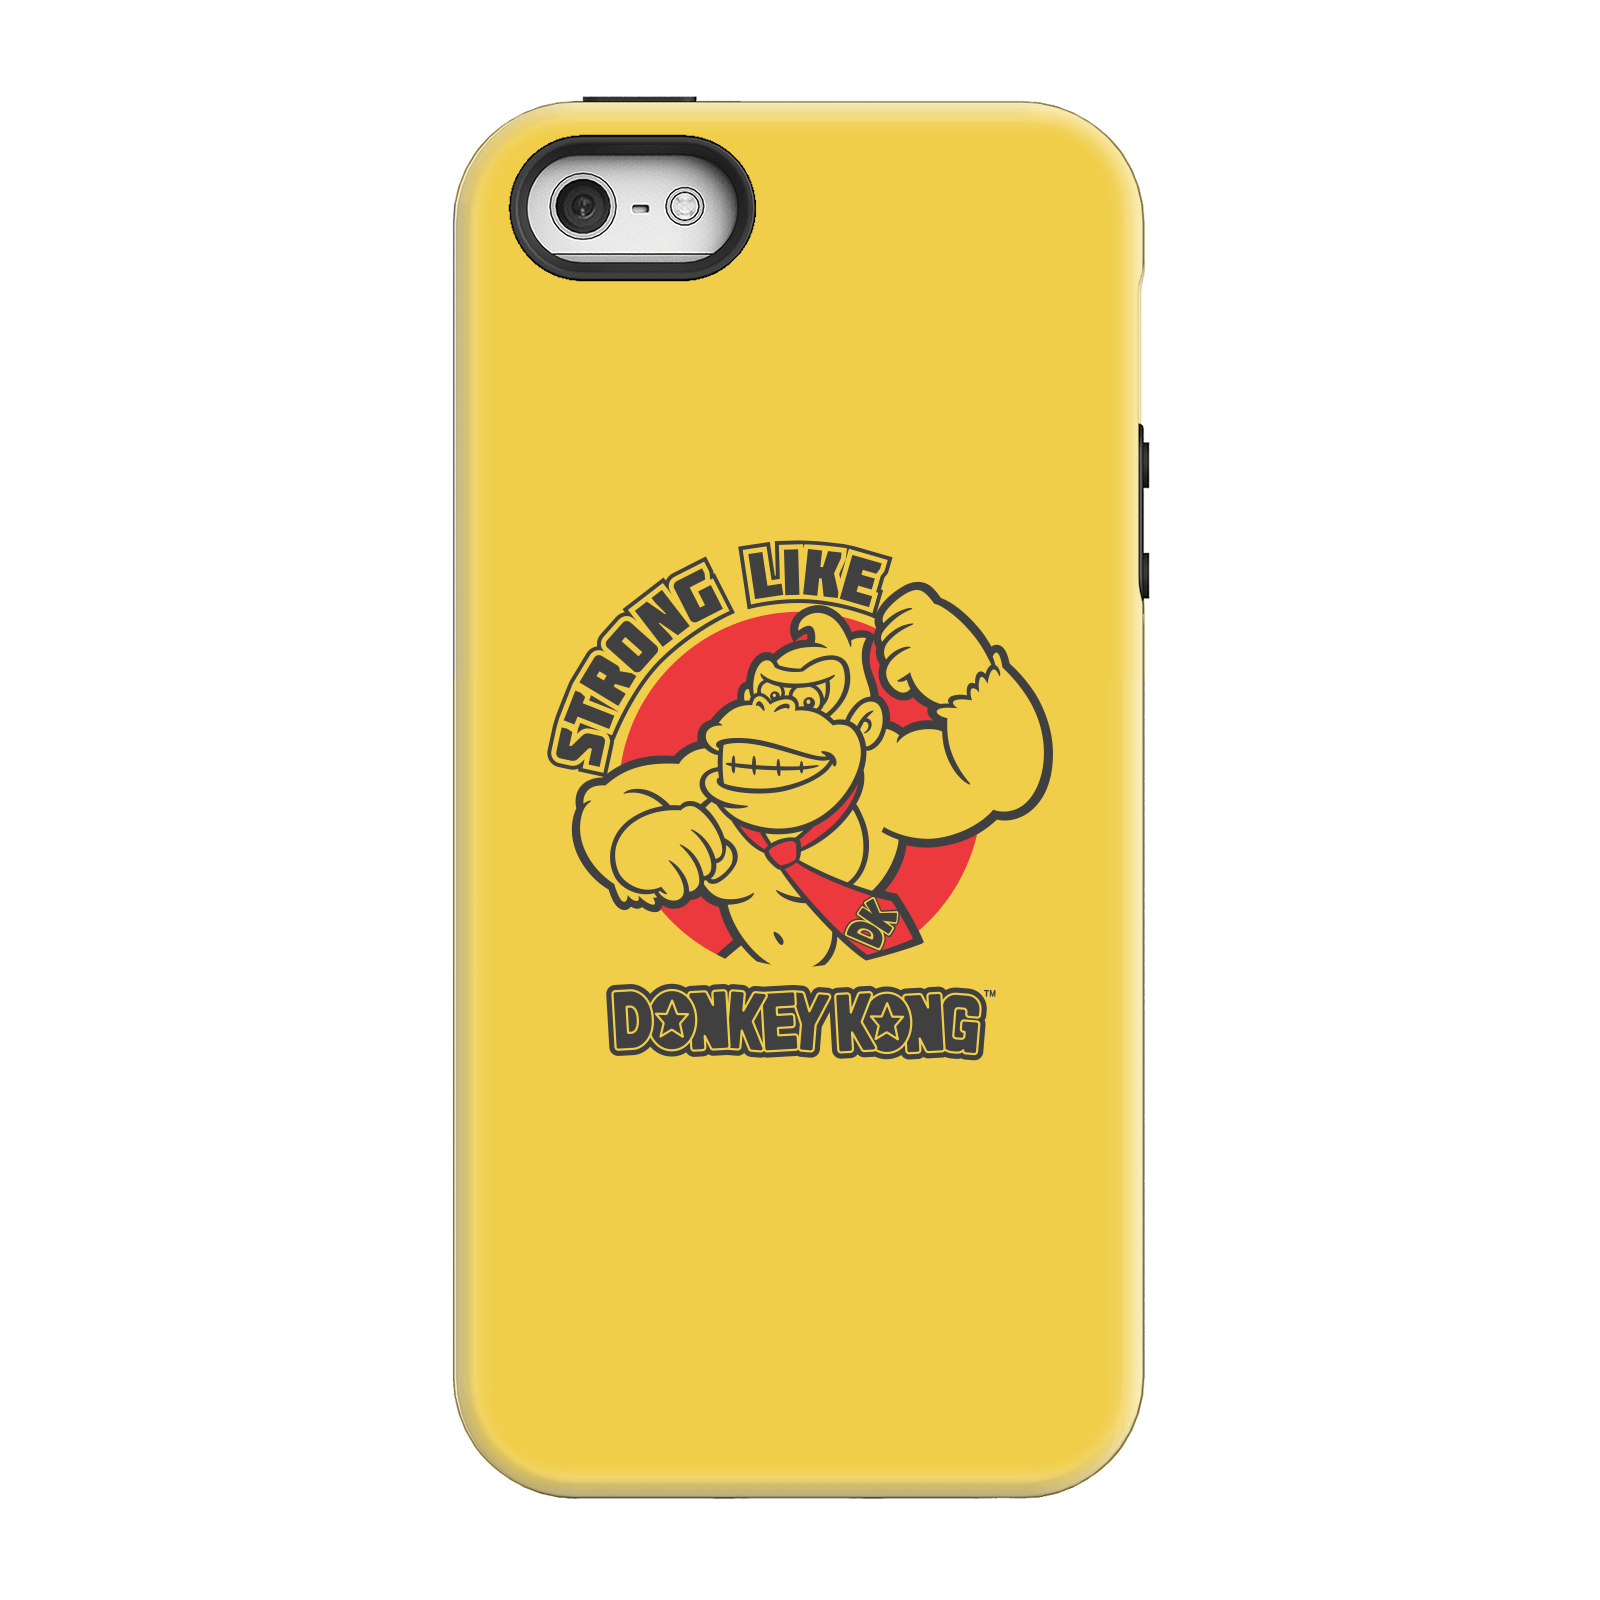 Nintendo Donkey Kong Strong Like Donkey Kong Phone Case - iPhone 5/5s - Tough Case - Gloss